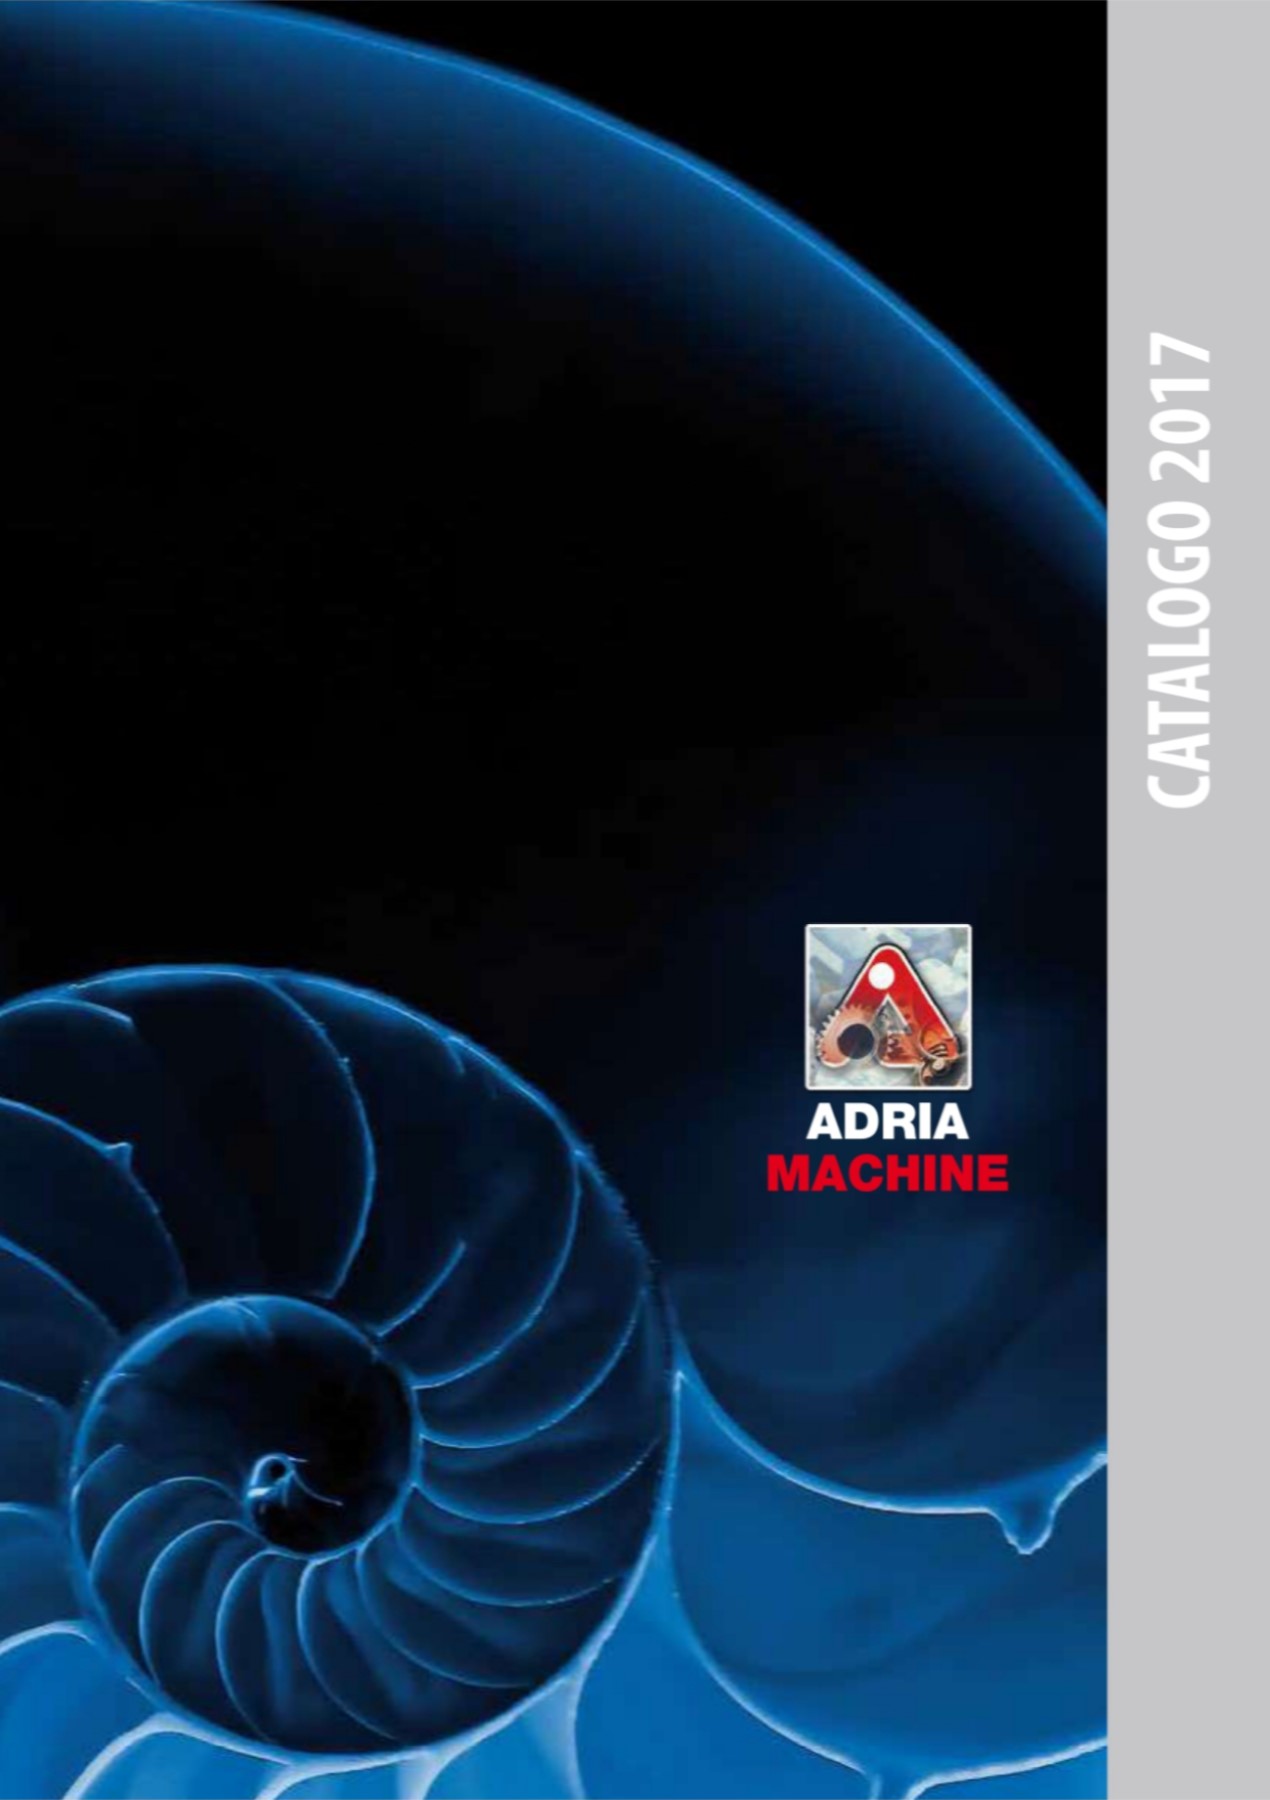 Copertina_catalogo_Adria Machine 2021_Arroweld Italia Spa